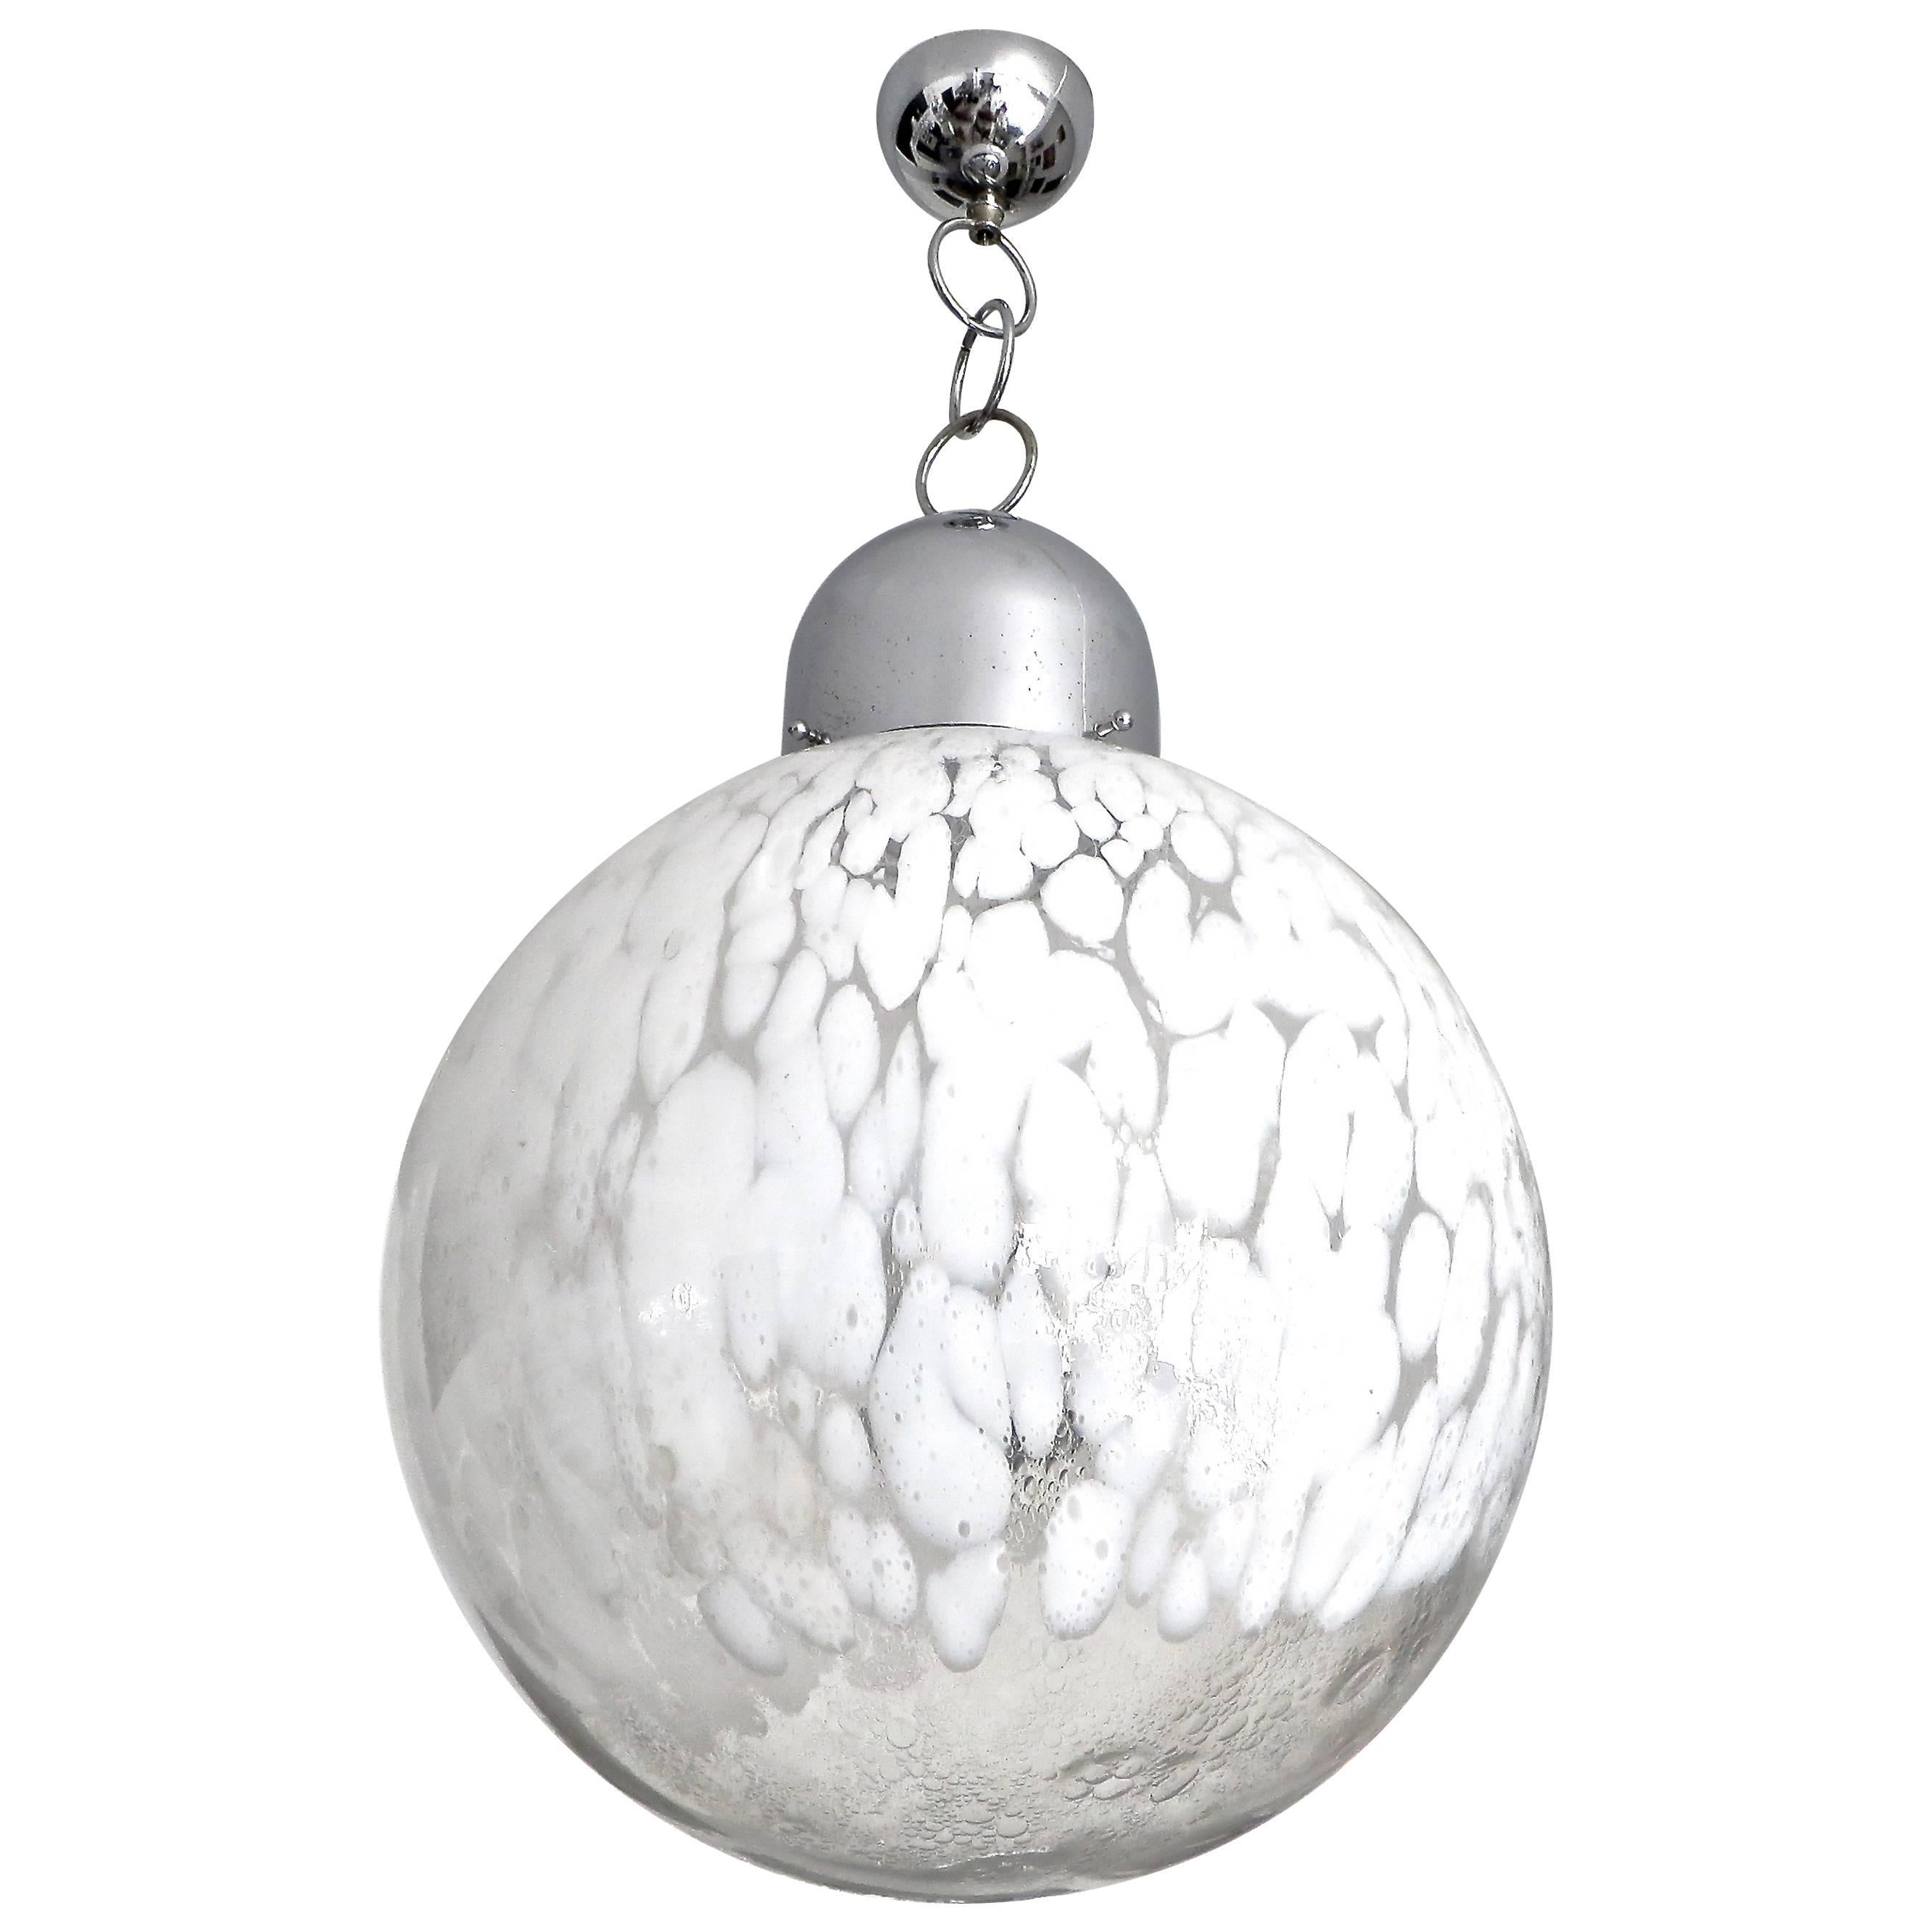 Murano Mazzega Globe Chandelier in Clear and White Mottled Handblown Glass